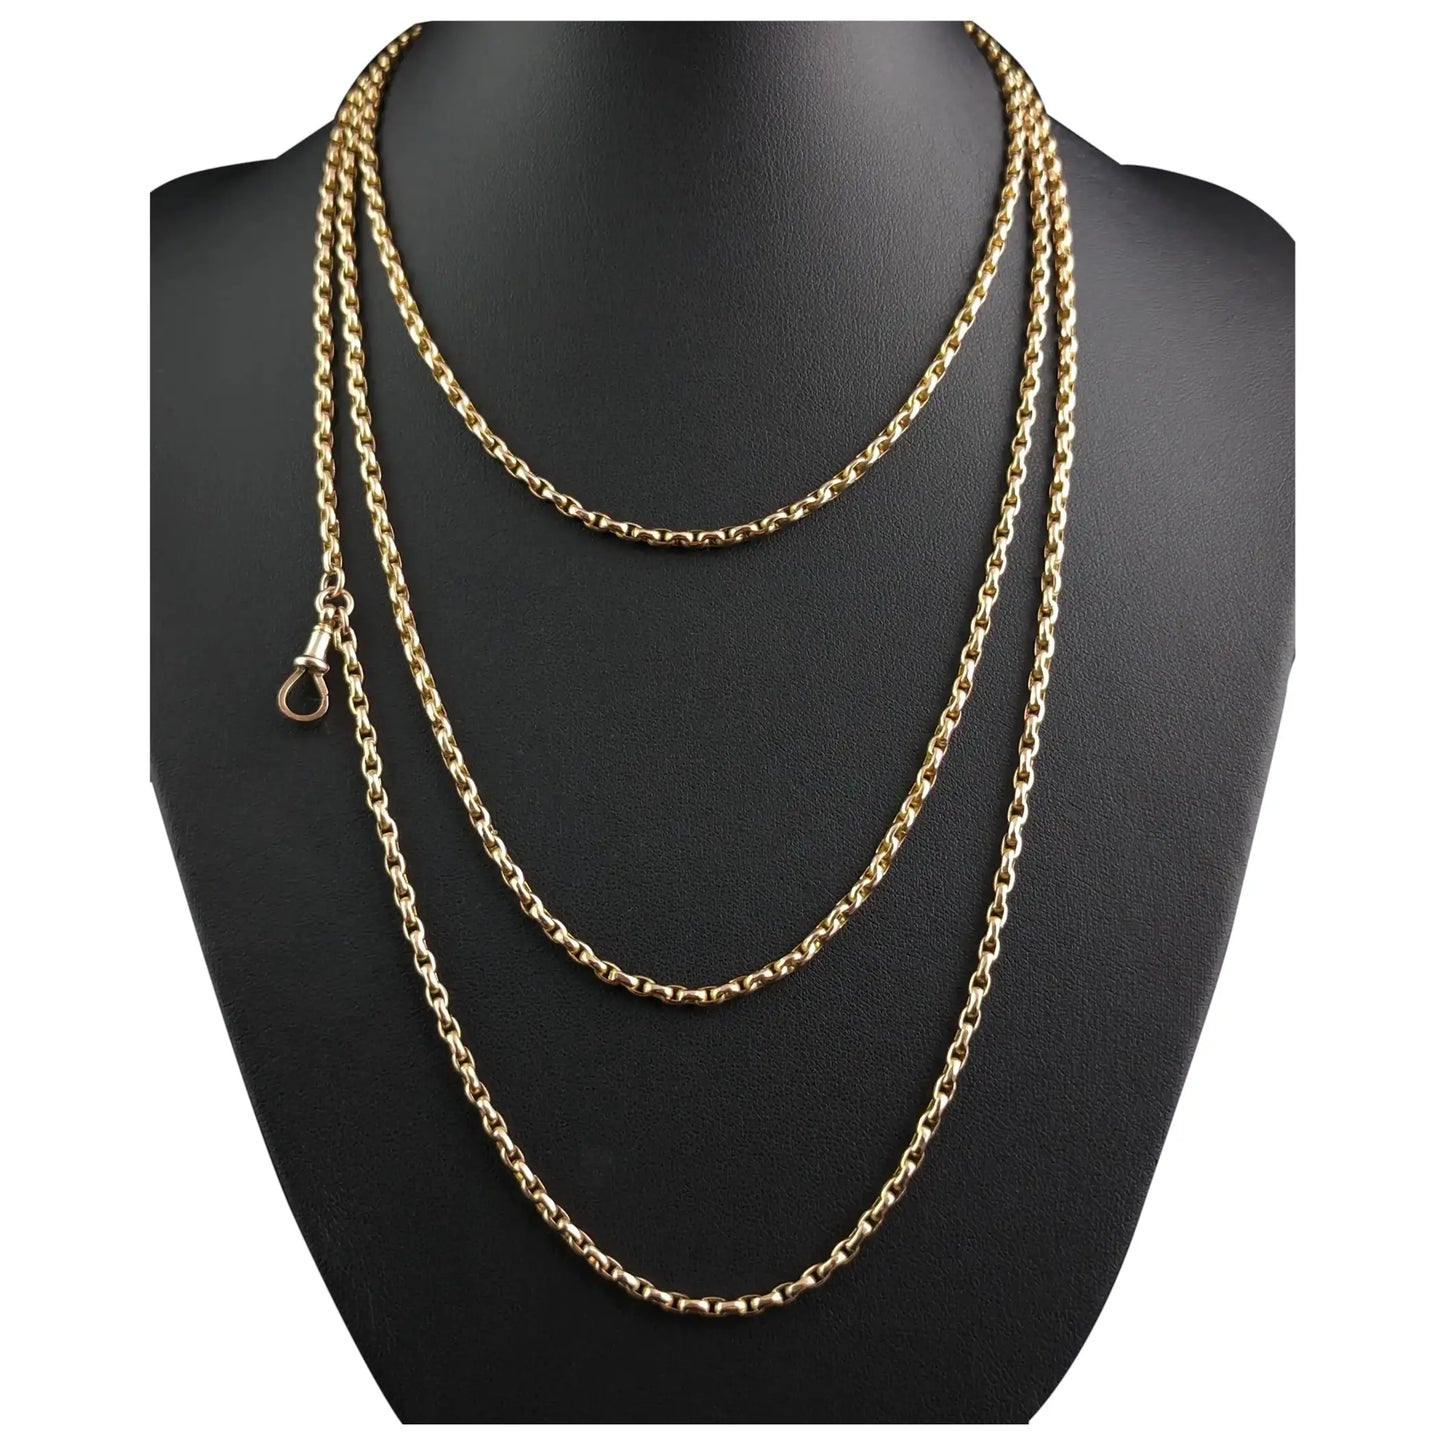 Antique 9k gold Long chain necklace, longuard, muff chsin, Victorian